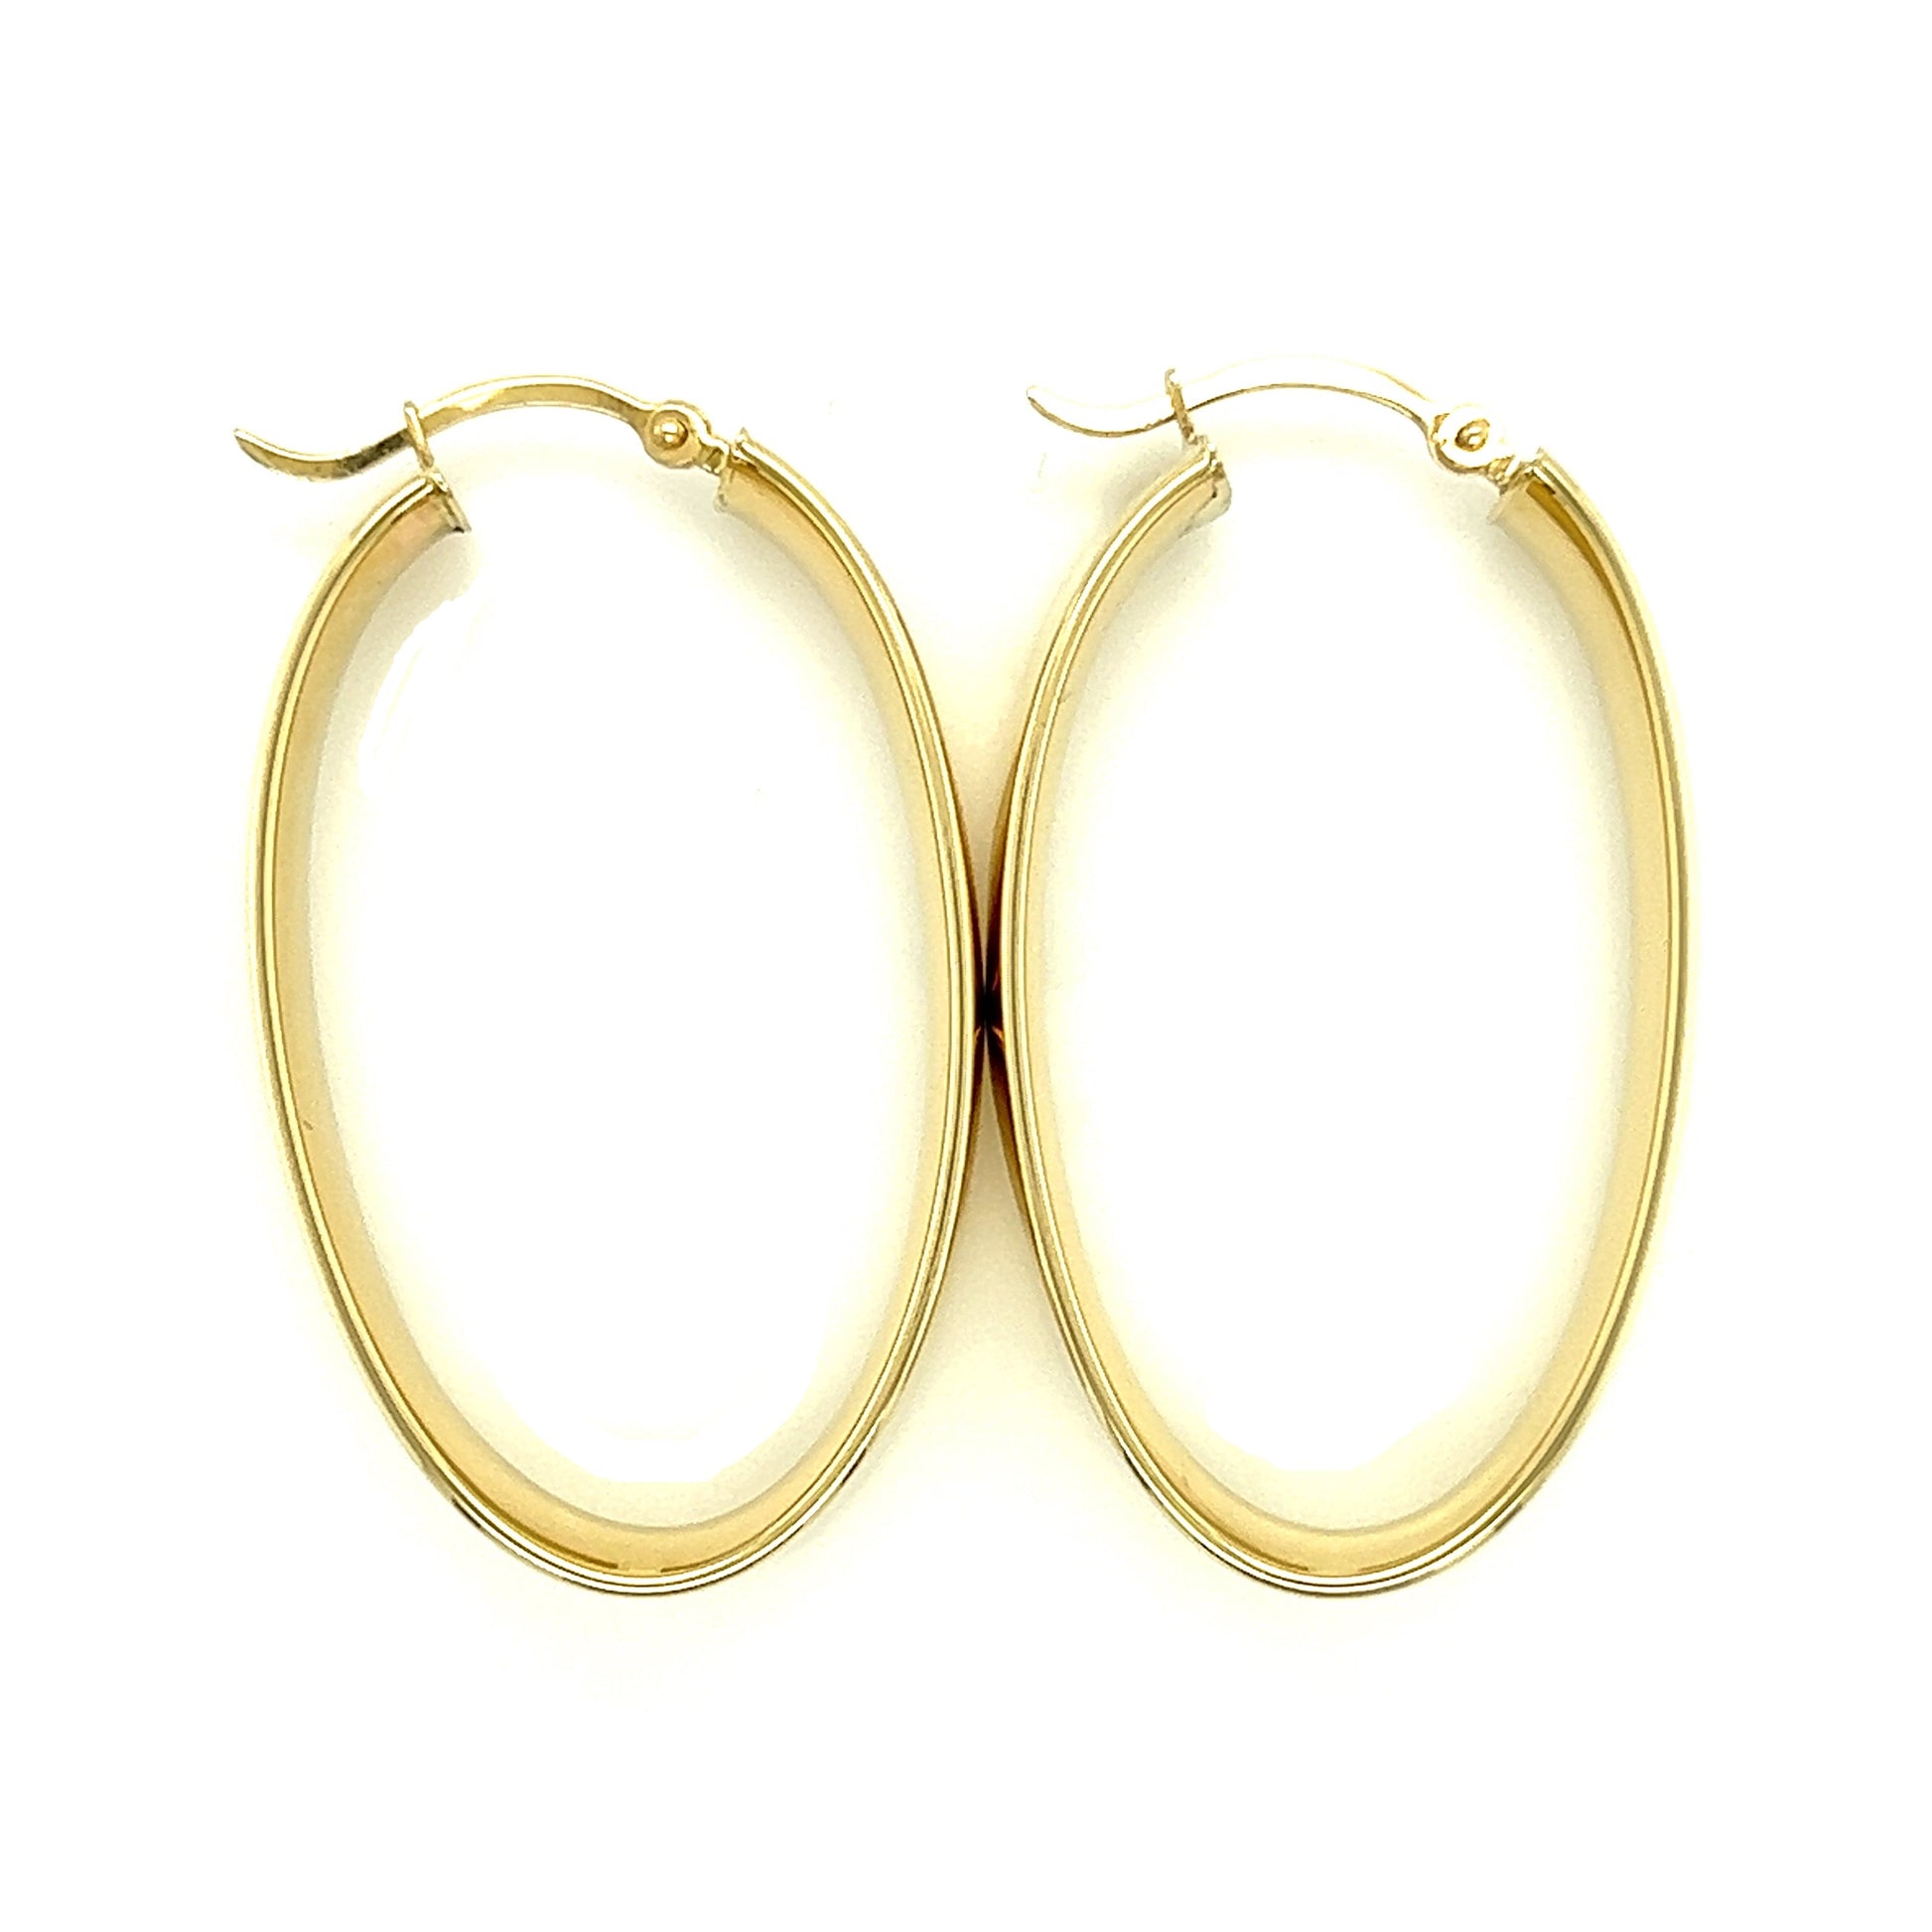 Oval Hoop 7mm Earrings in 14K Yellow Gold Top View